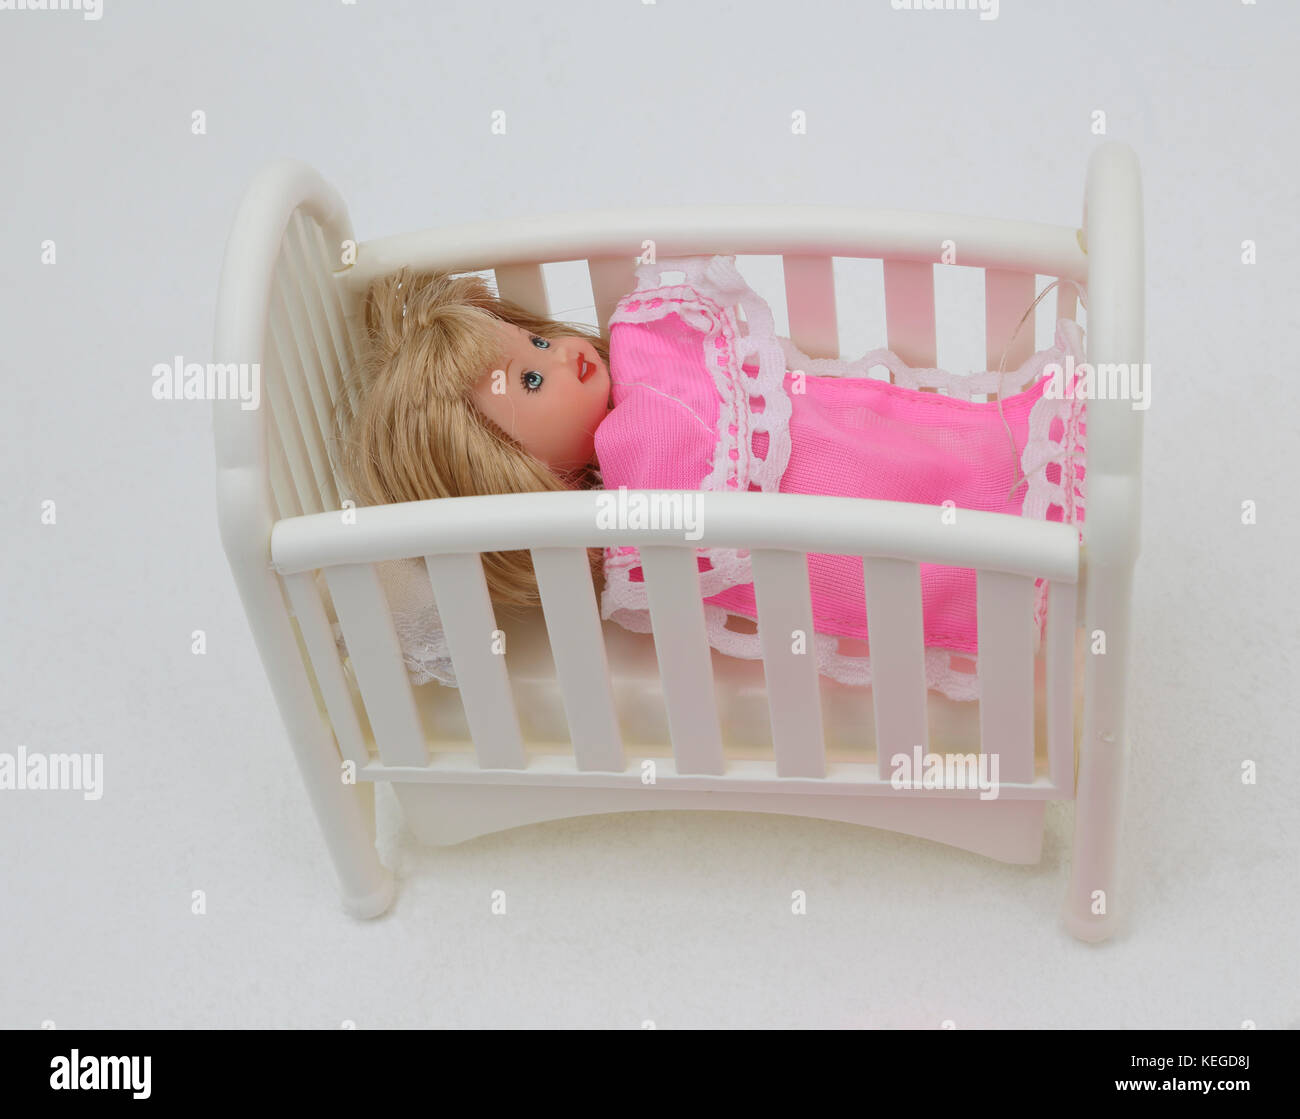 barbie baby crib